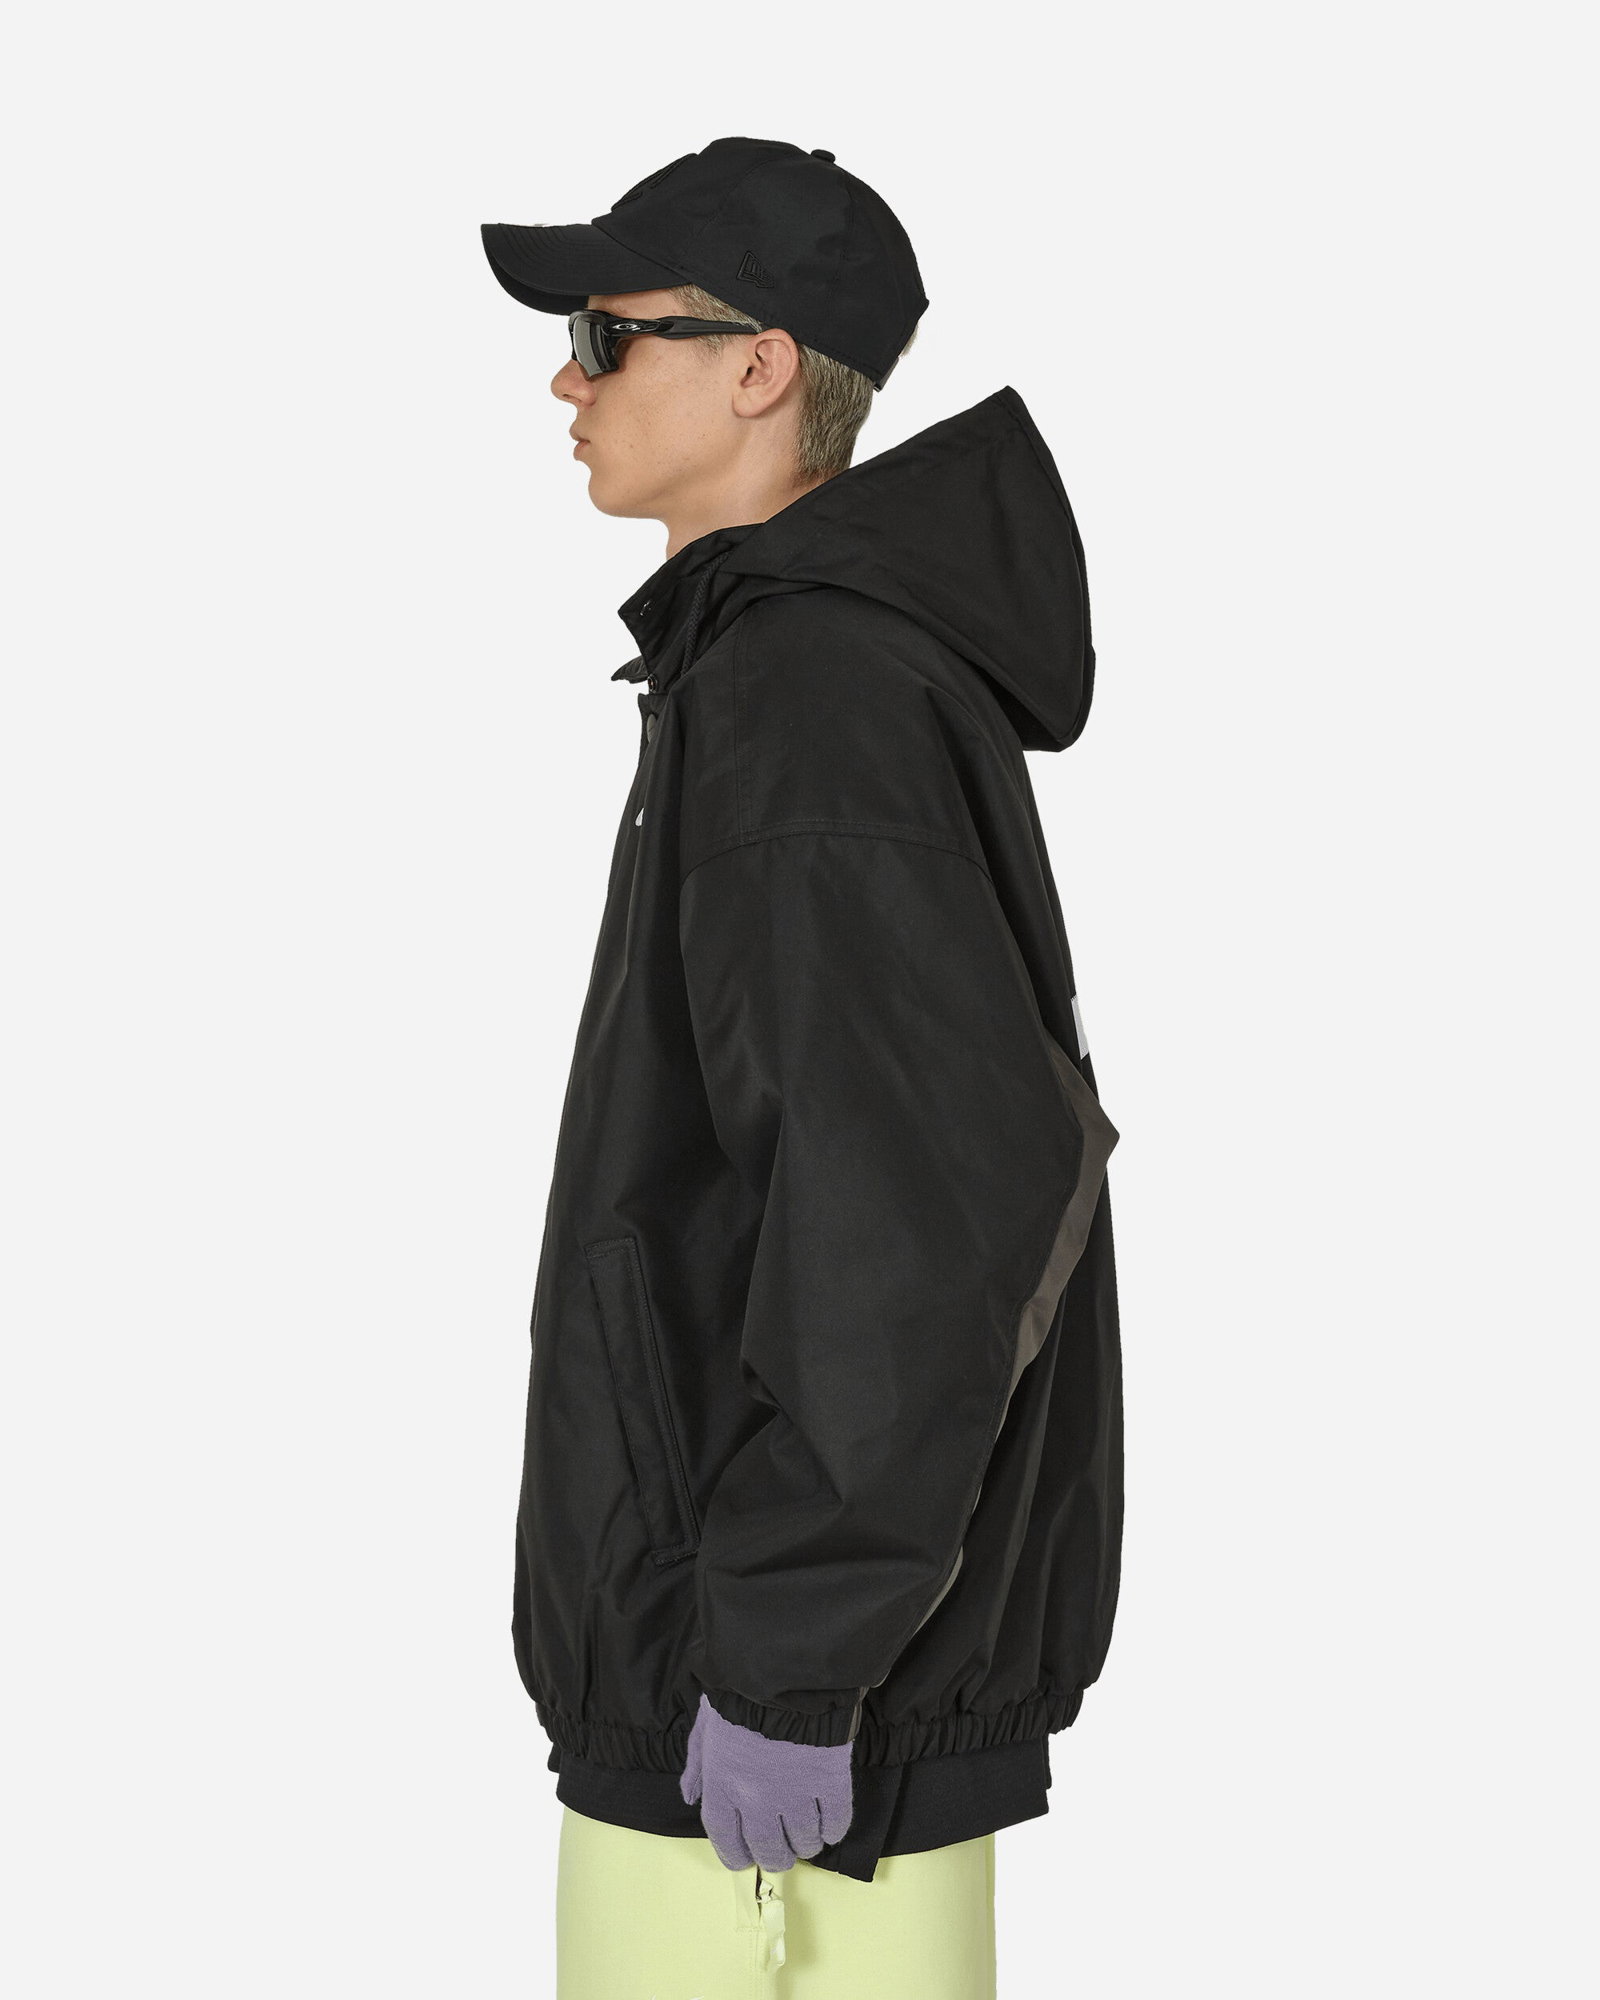 Nike Solo Swoosh Puffer Jacket » Buy online now!